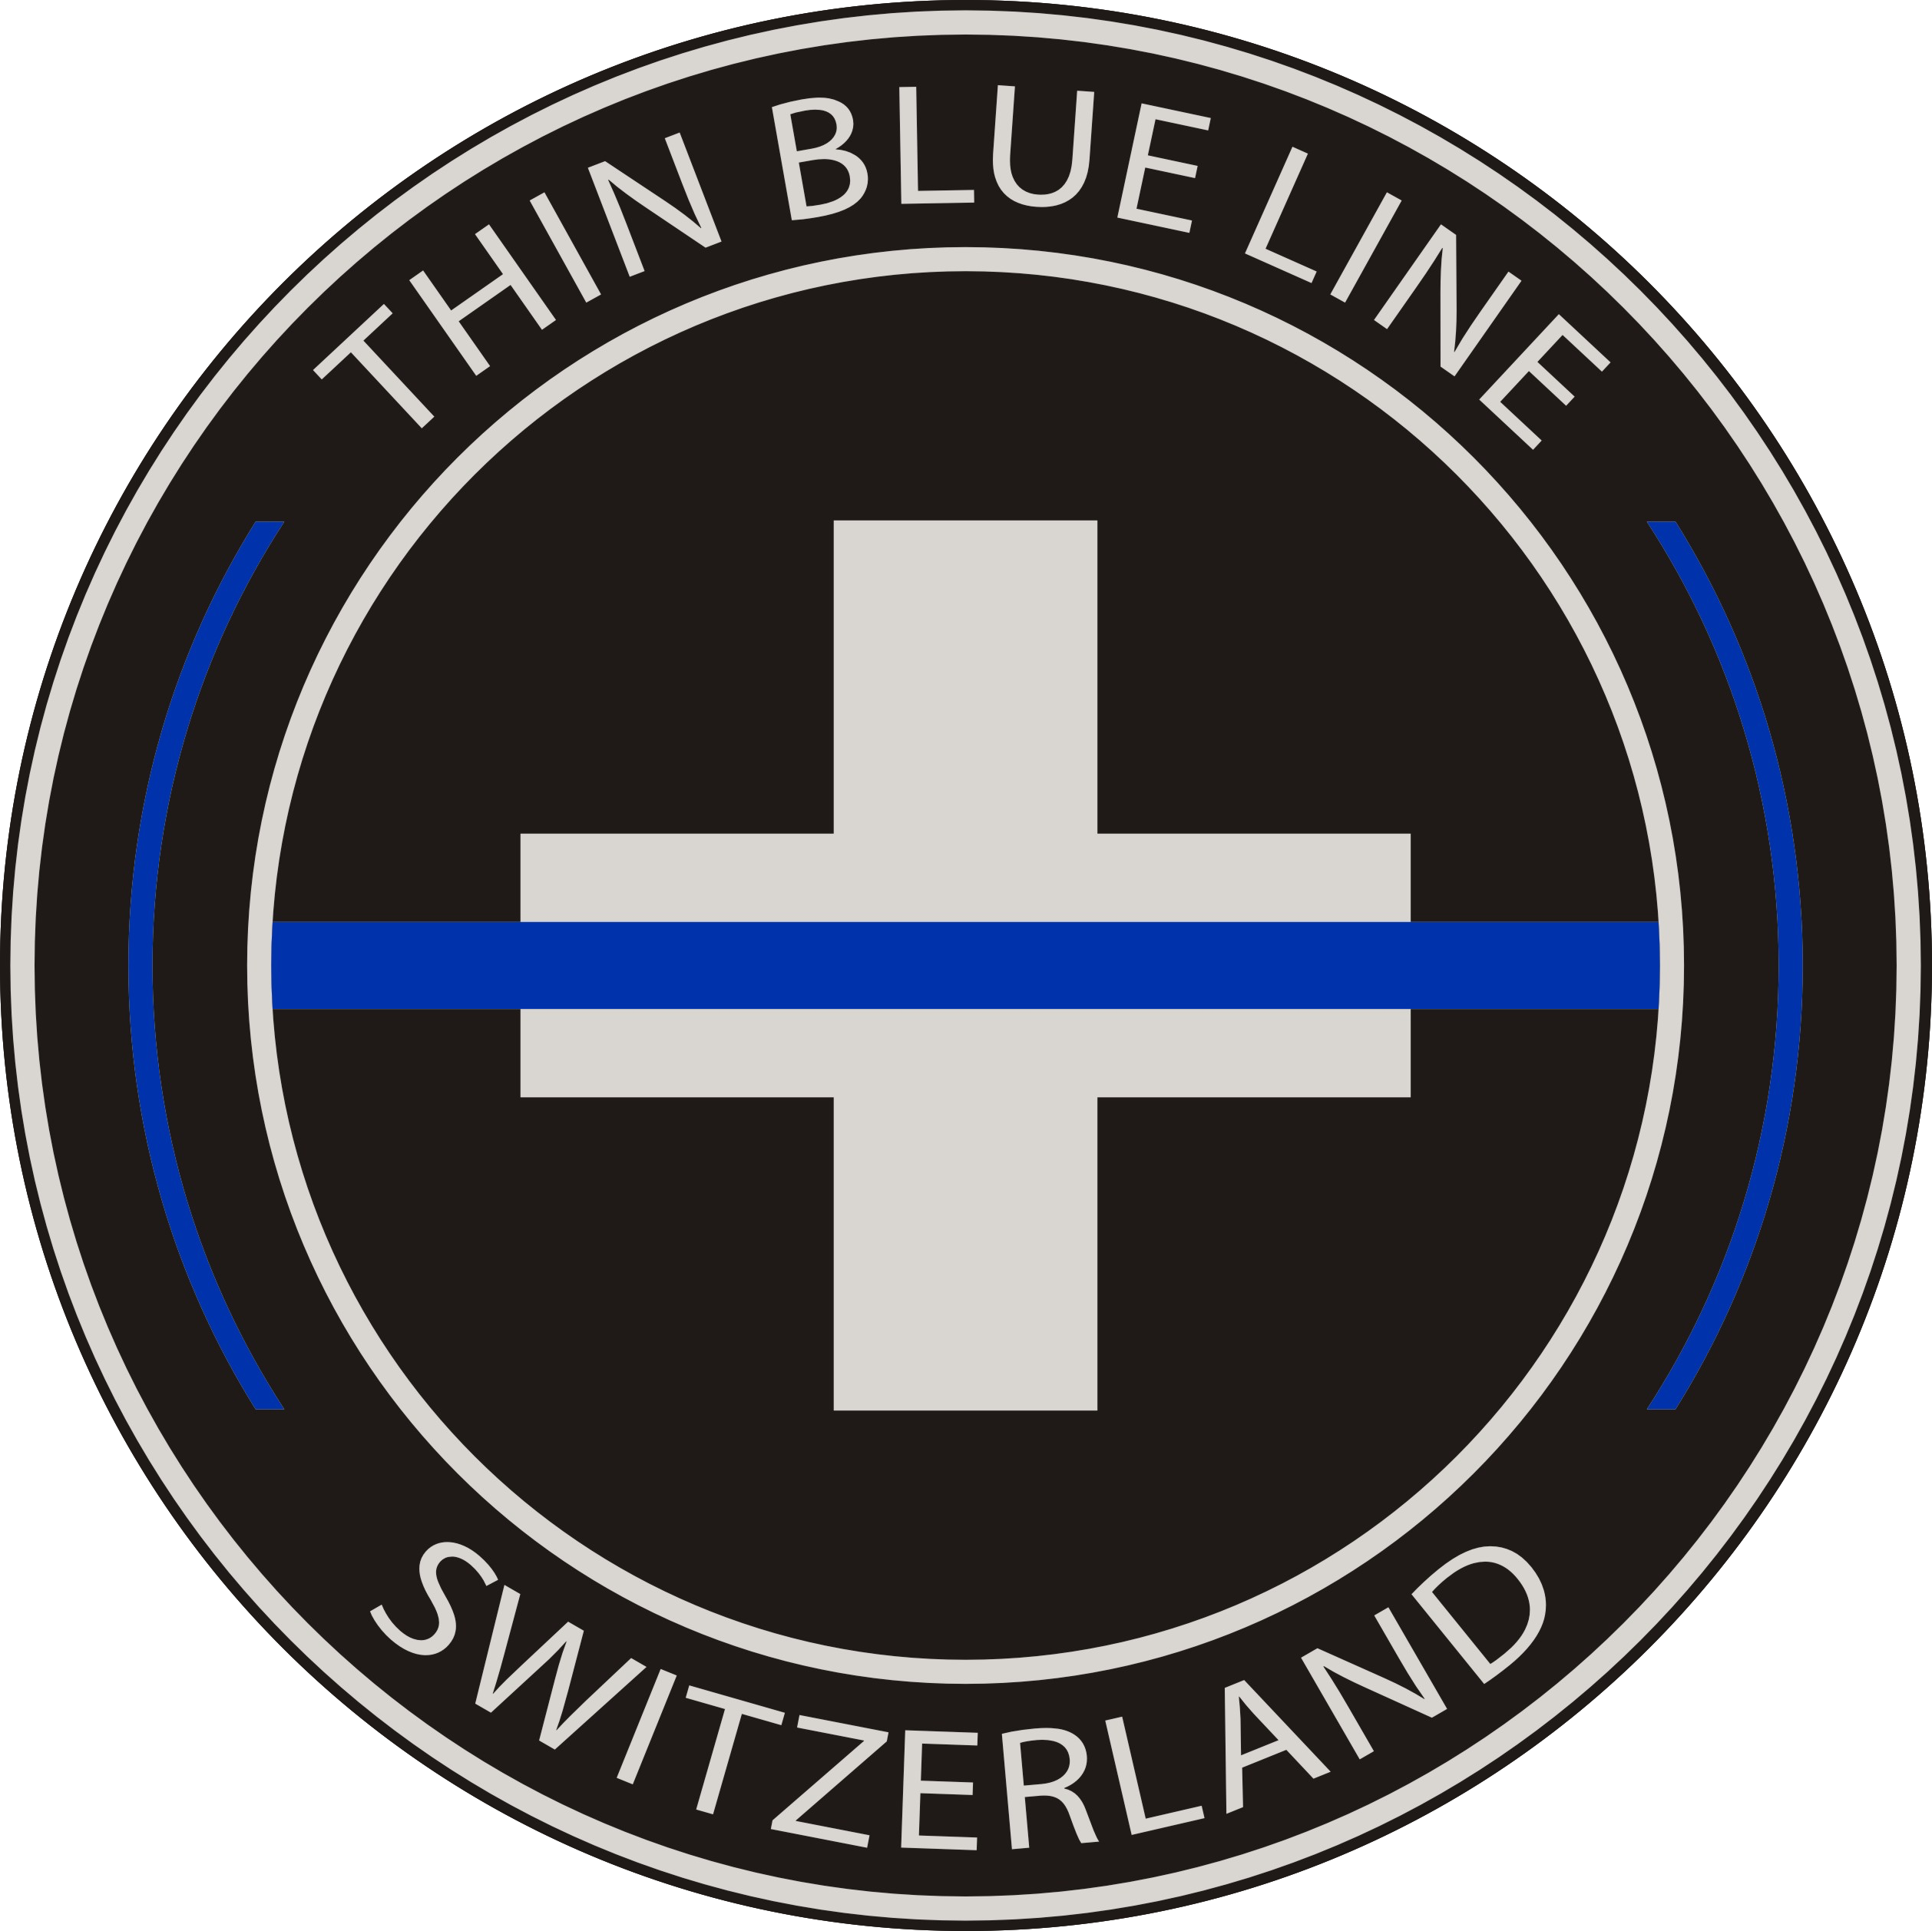 Thin Blue line logo